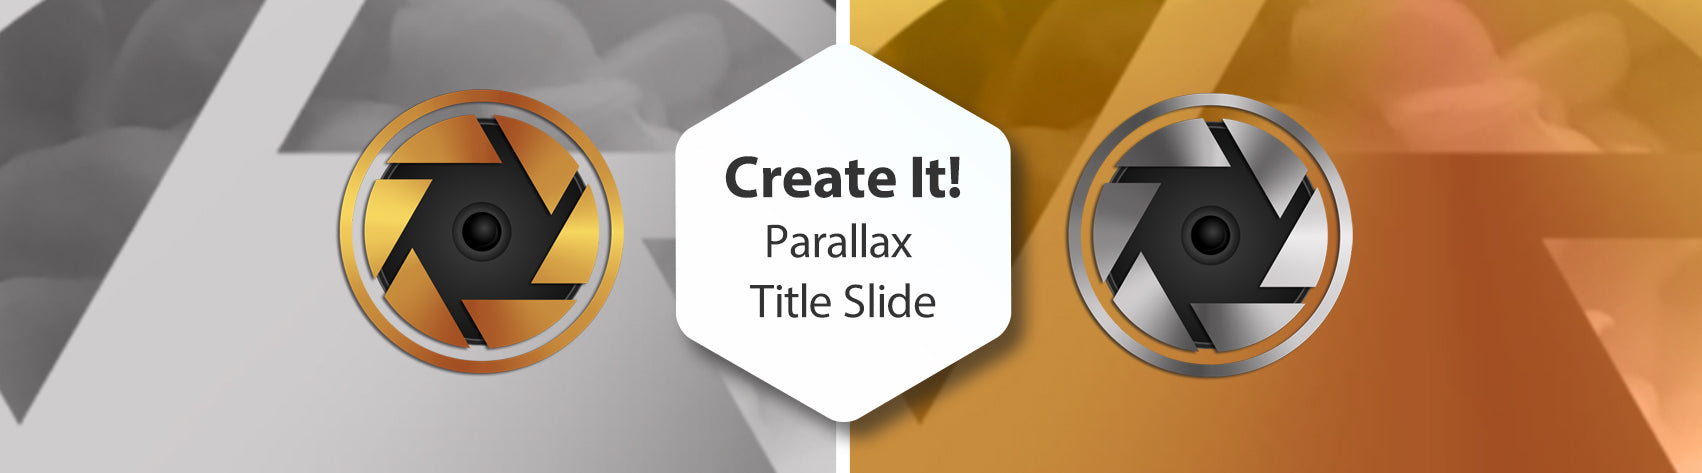 Create It! Parallax Title Slide